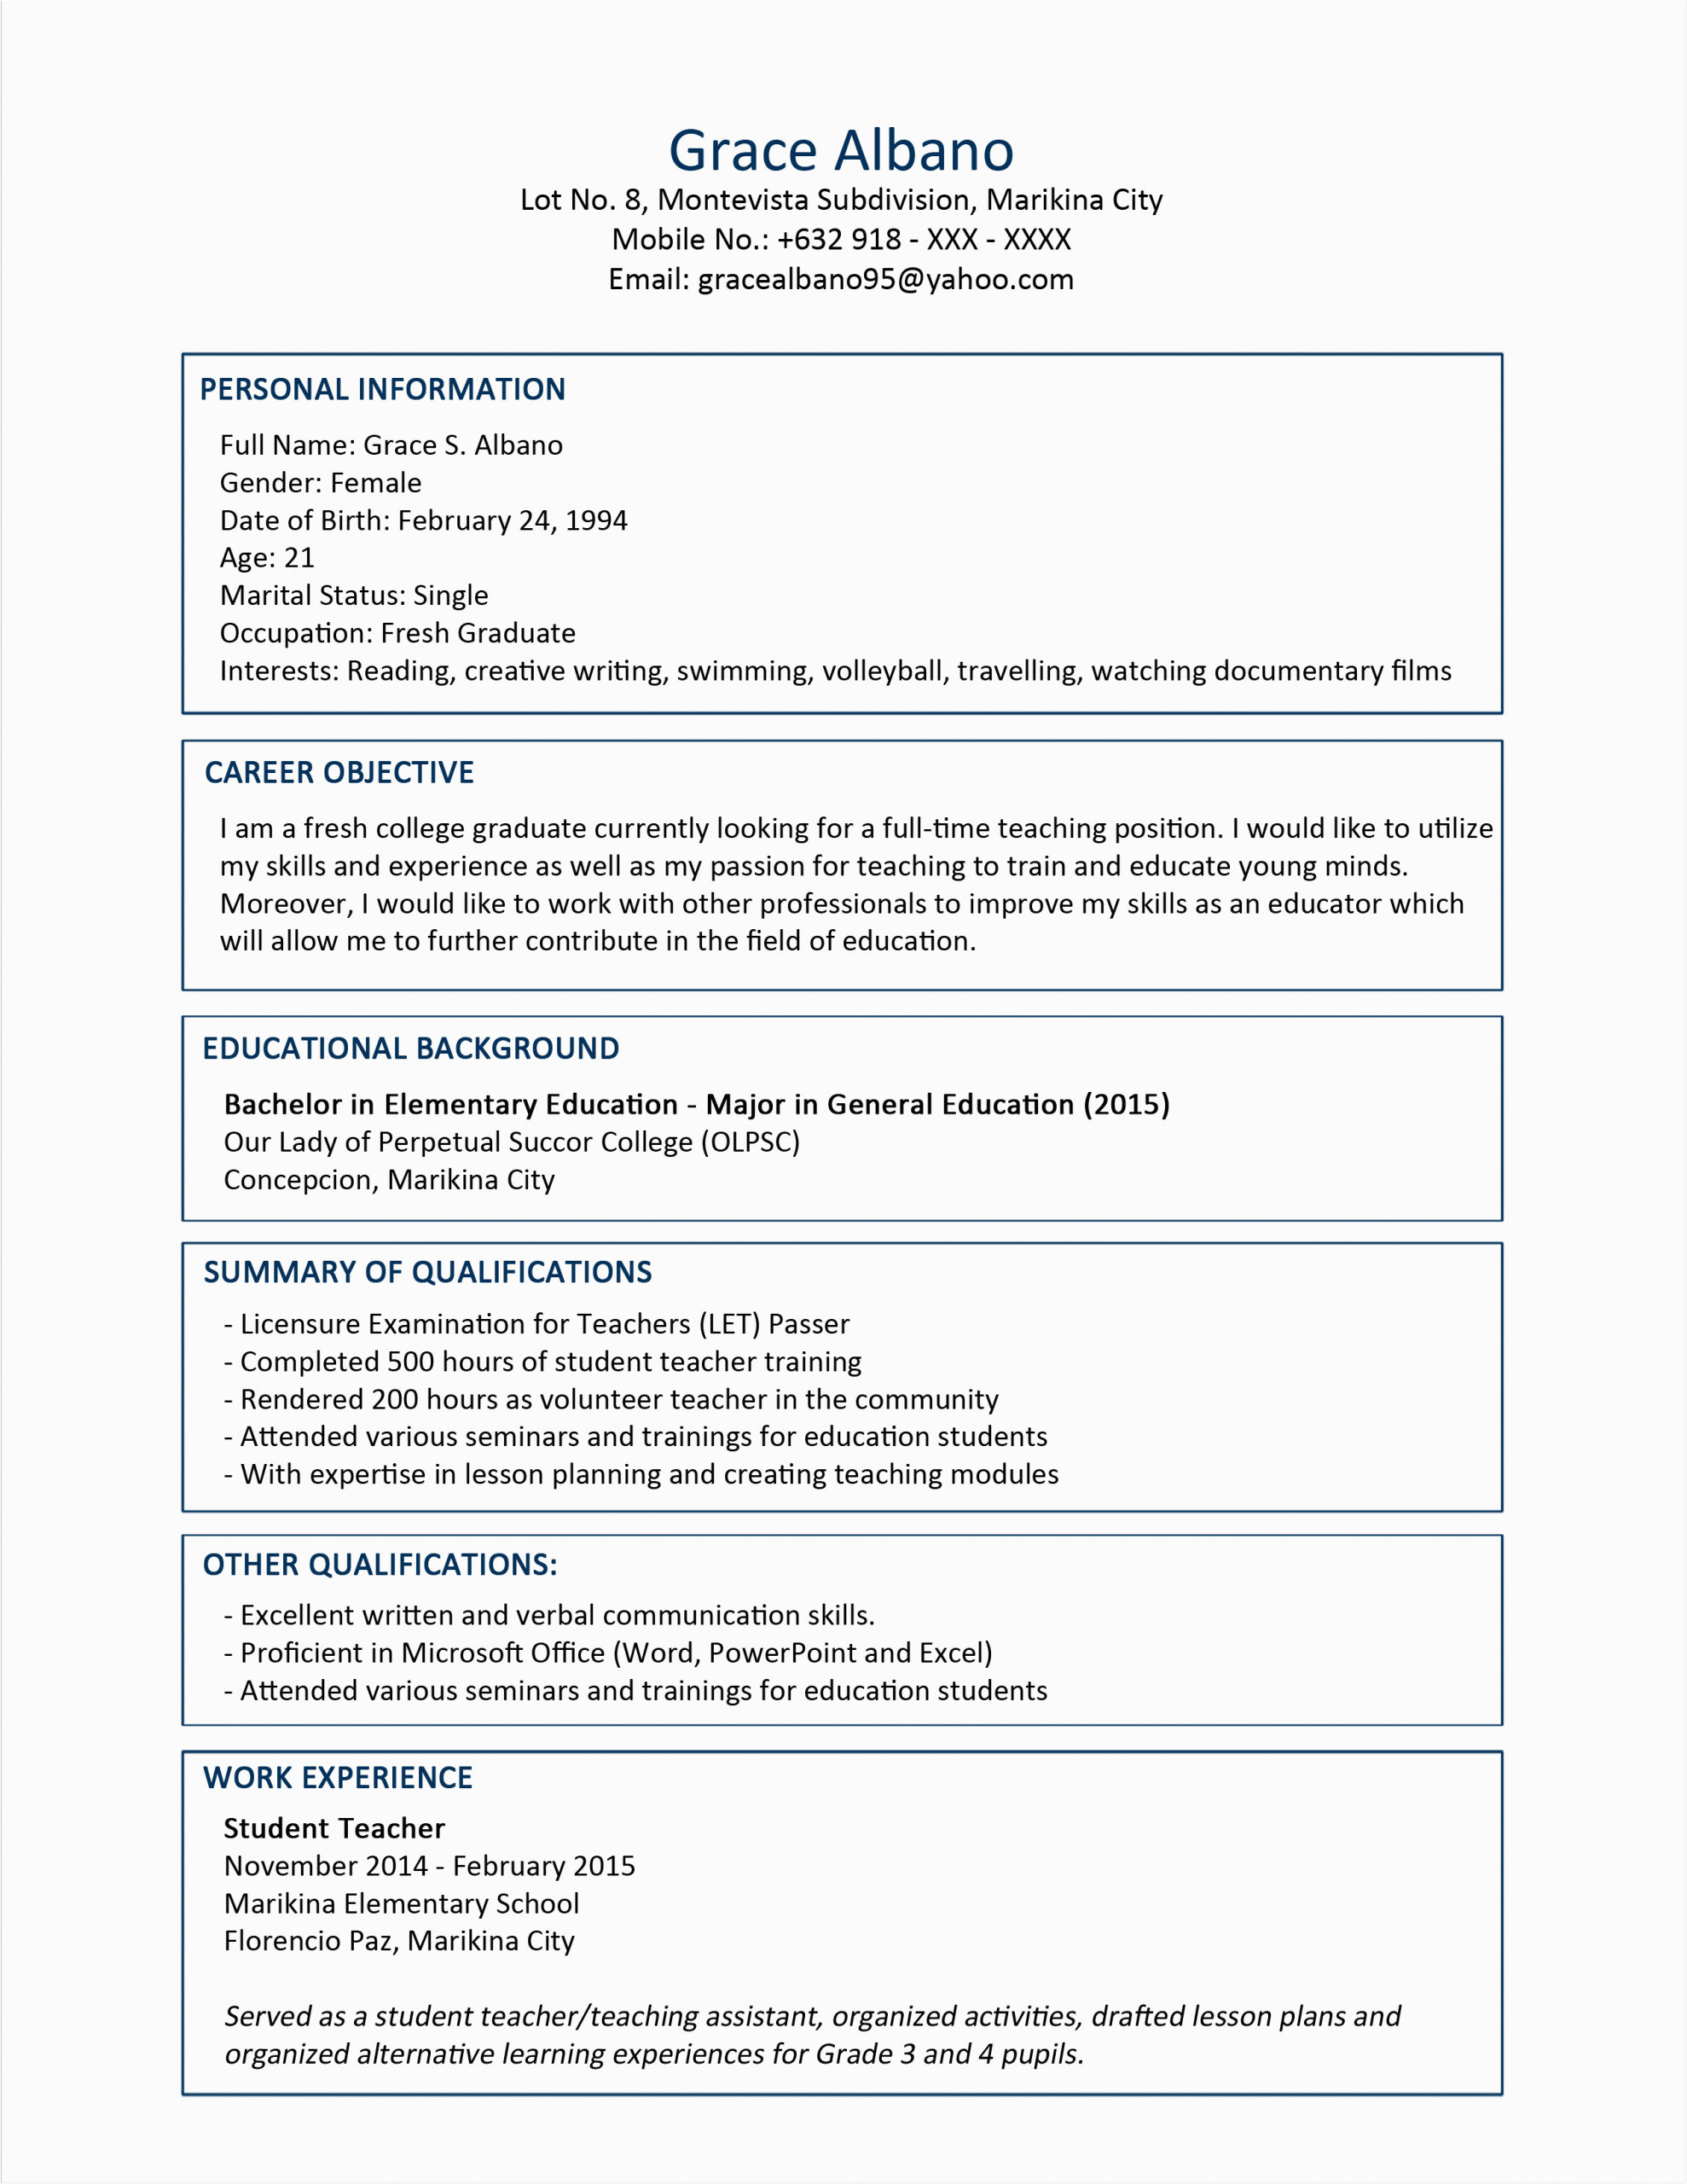 Medtech Resume Sample Philippines Fresh Graduate Sample Resume format for Fresh Graduates Two Page format